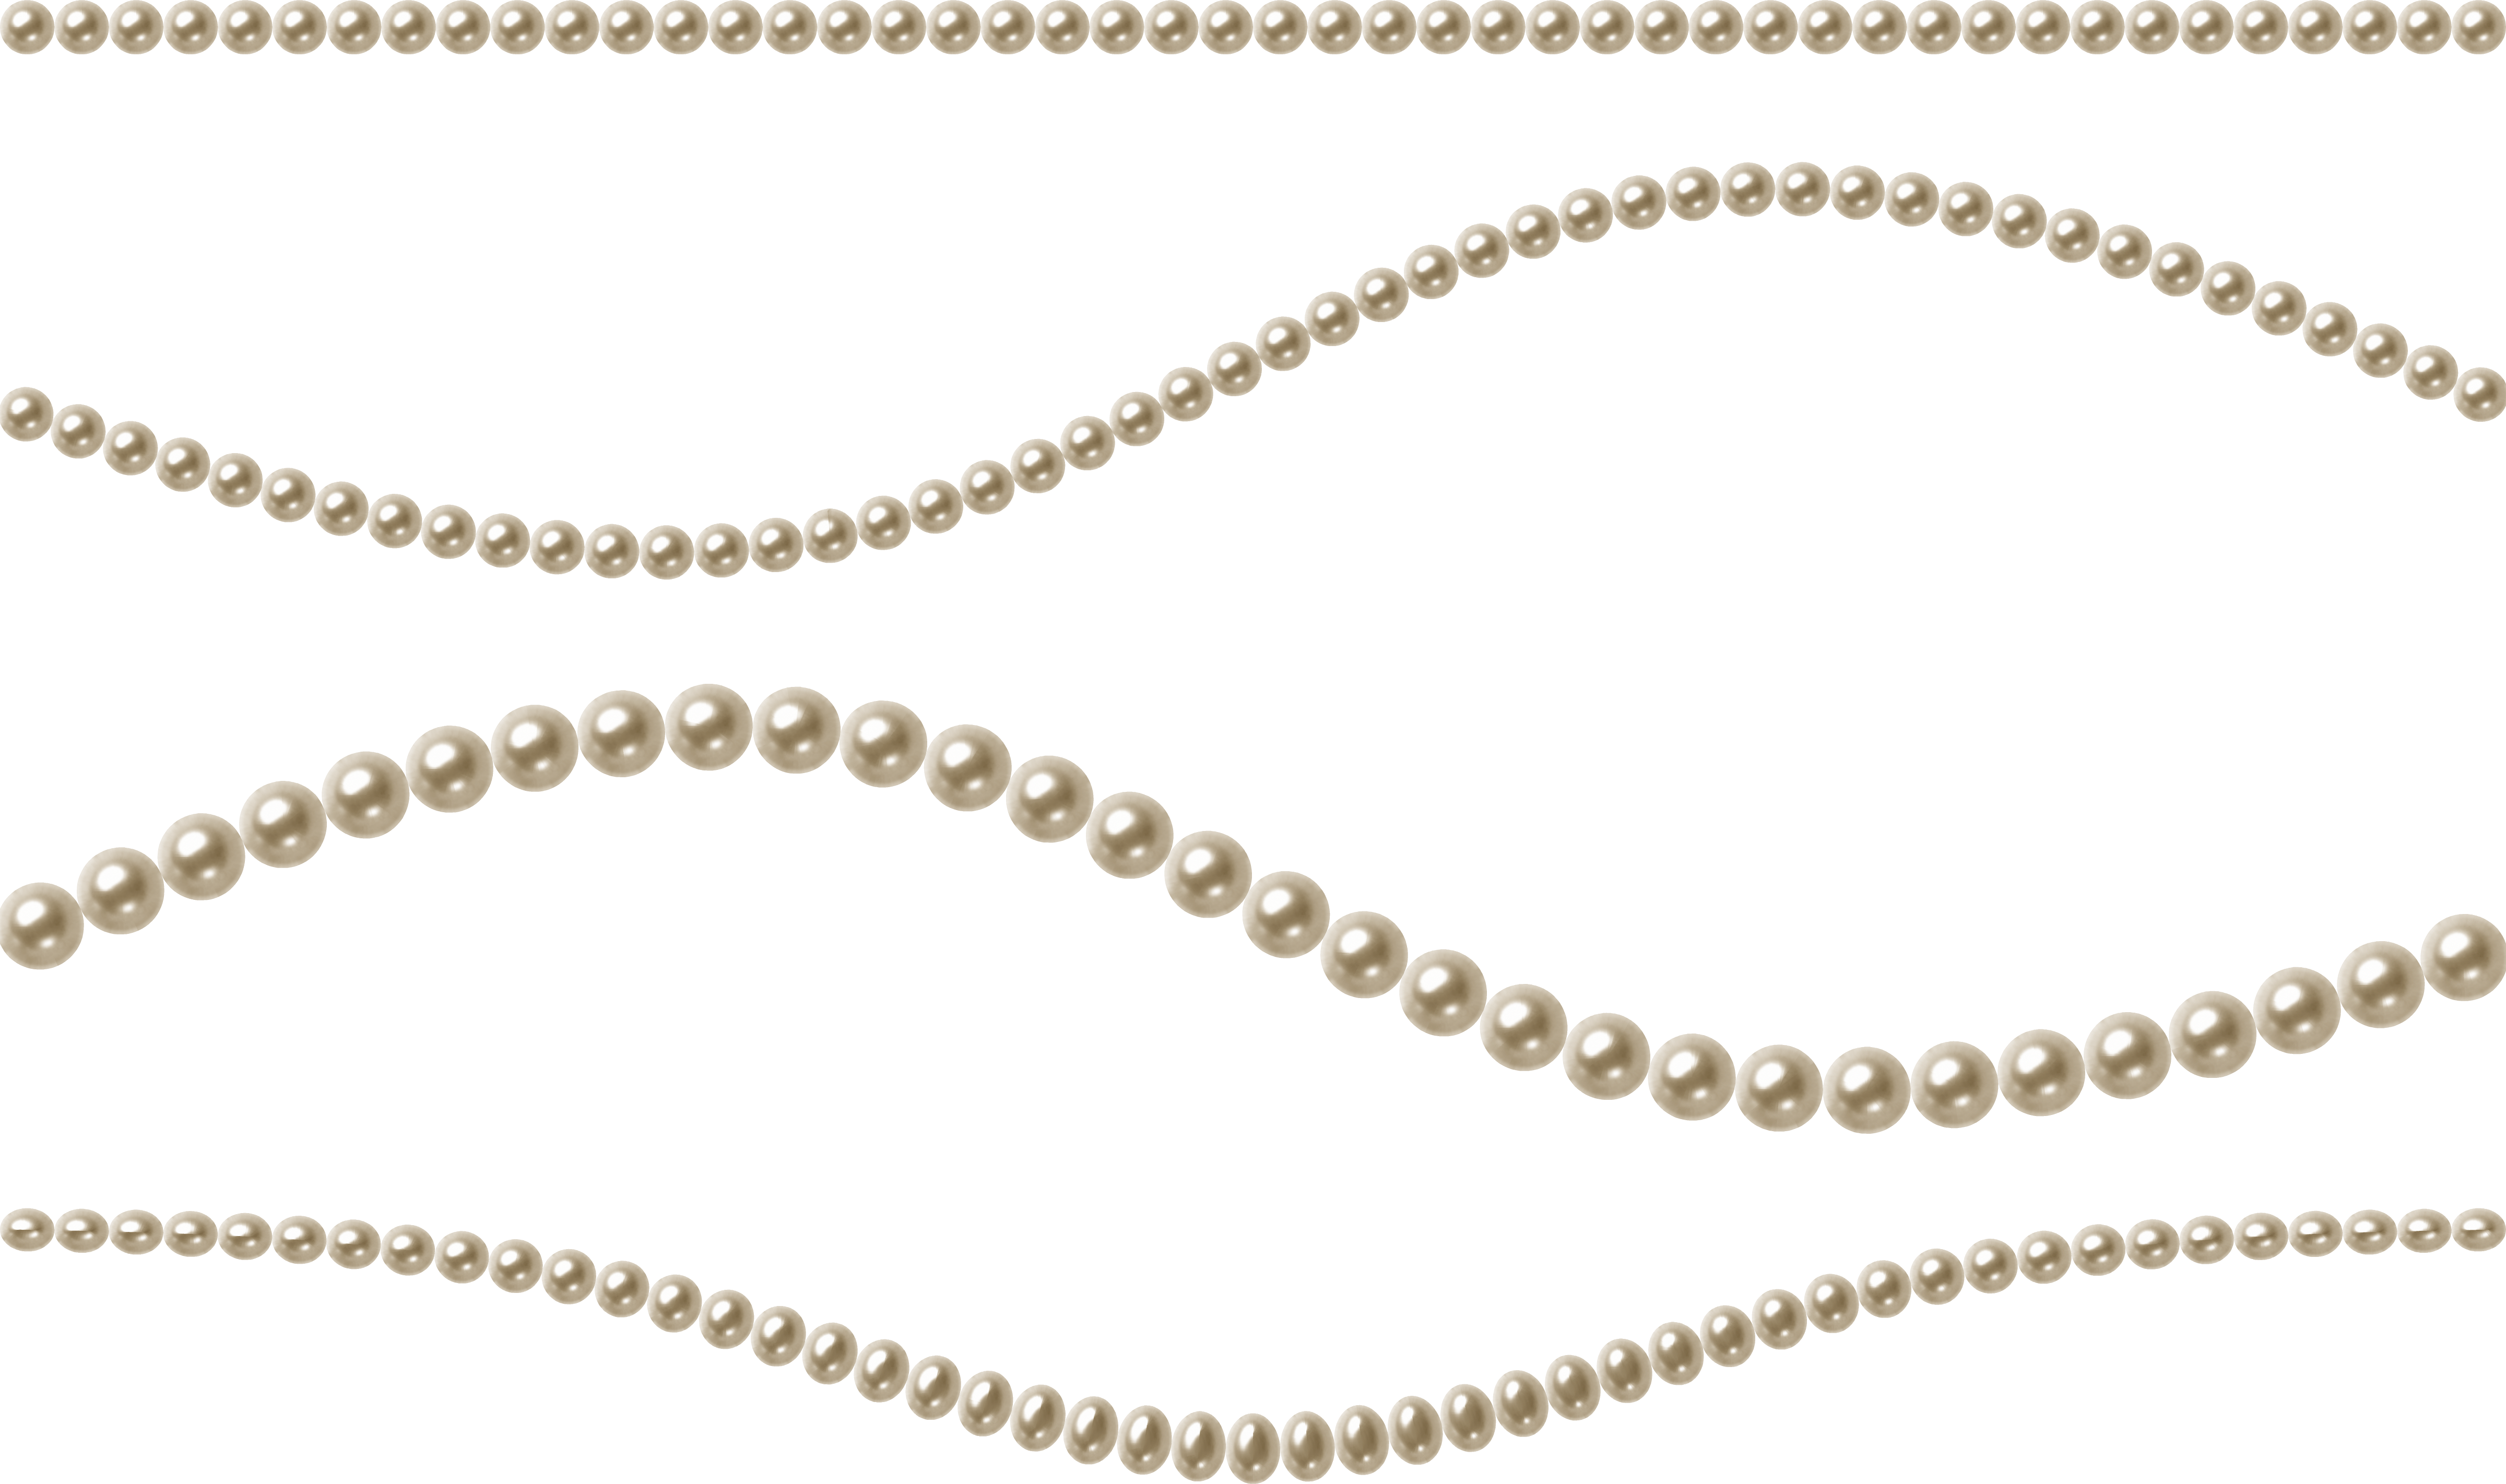 Collana di perle